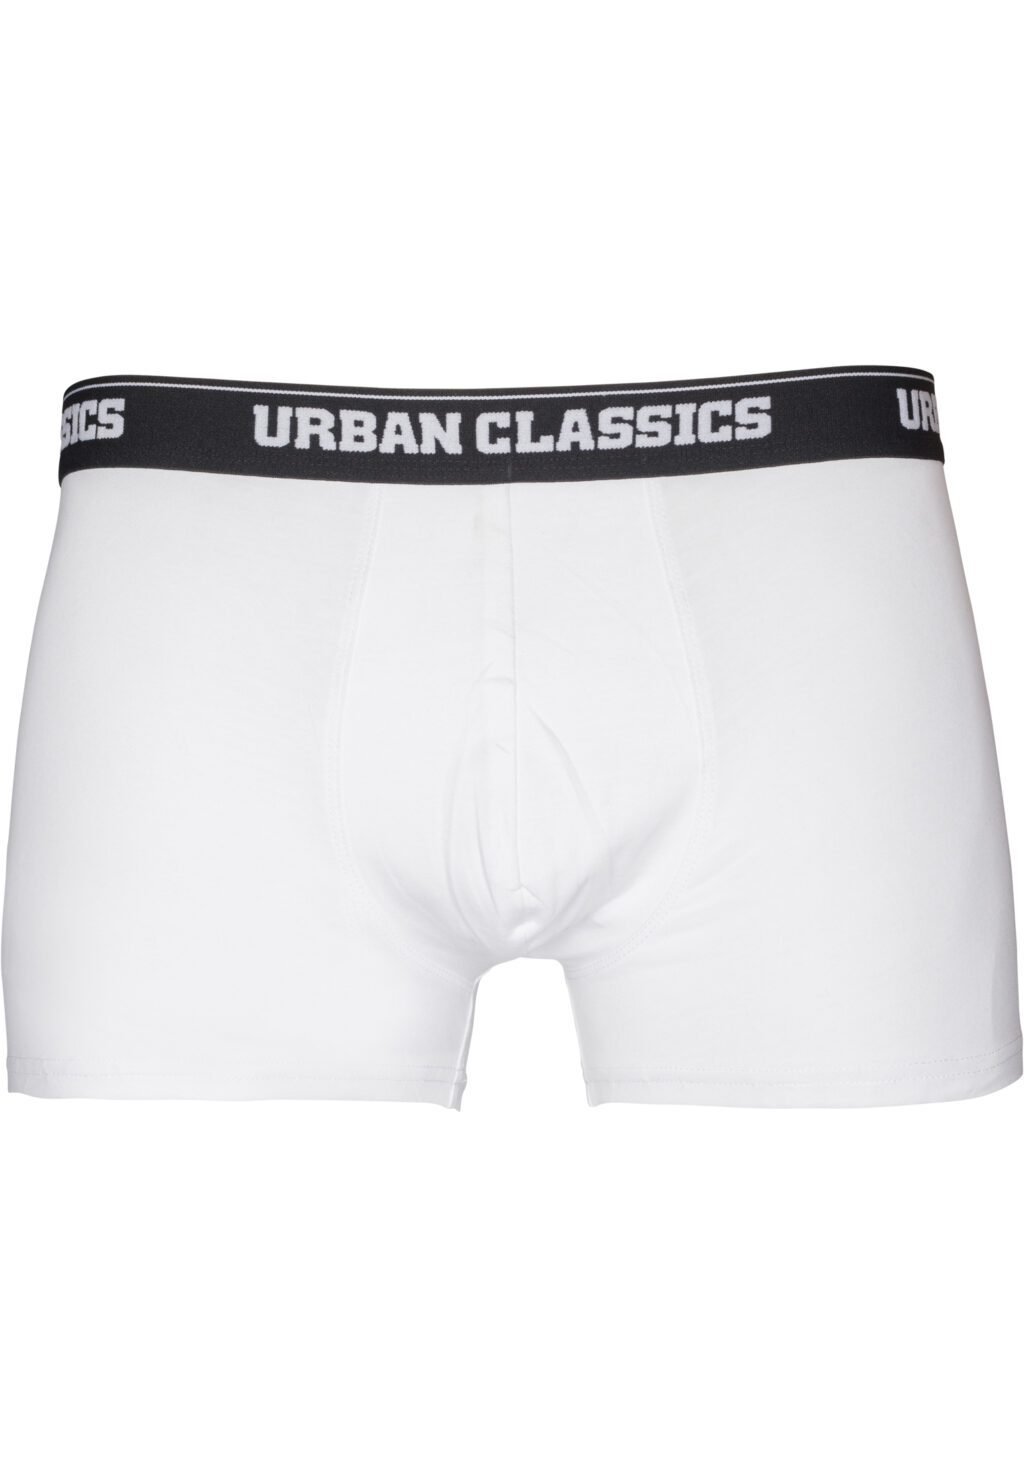 Urban Classics Boxer Shorts 5-Pack bur/dkblu+wht/blk+wht+aop+blk TB3845